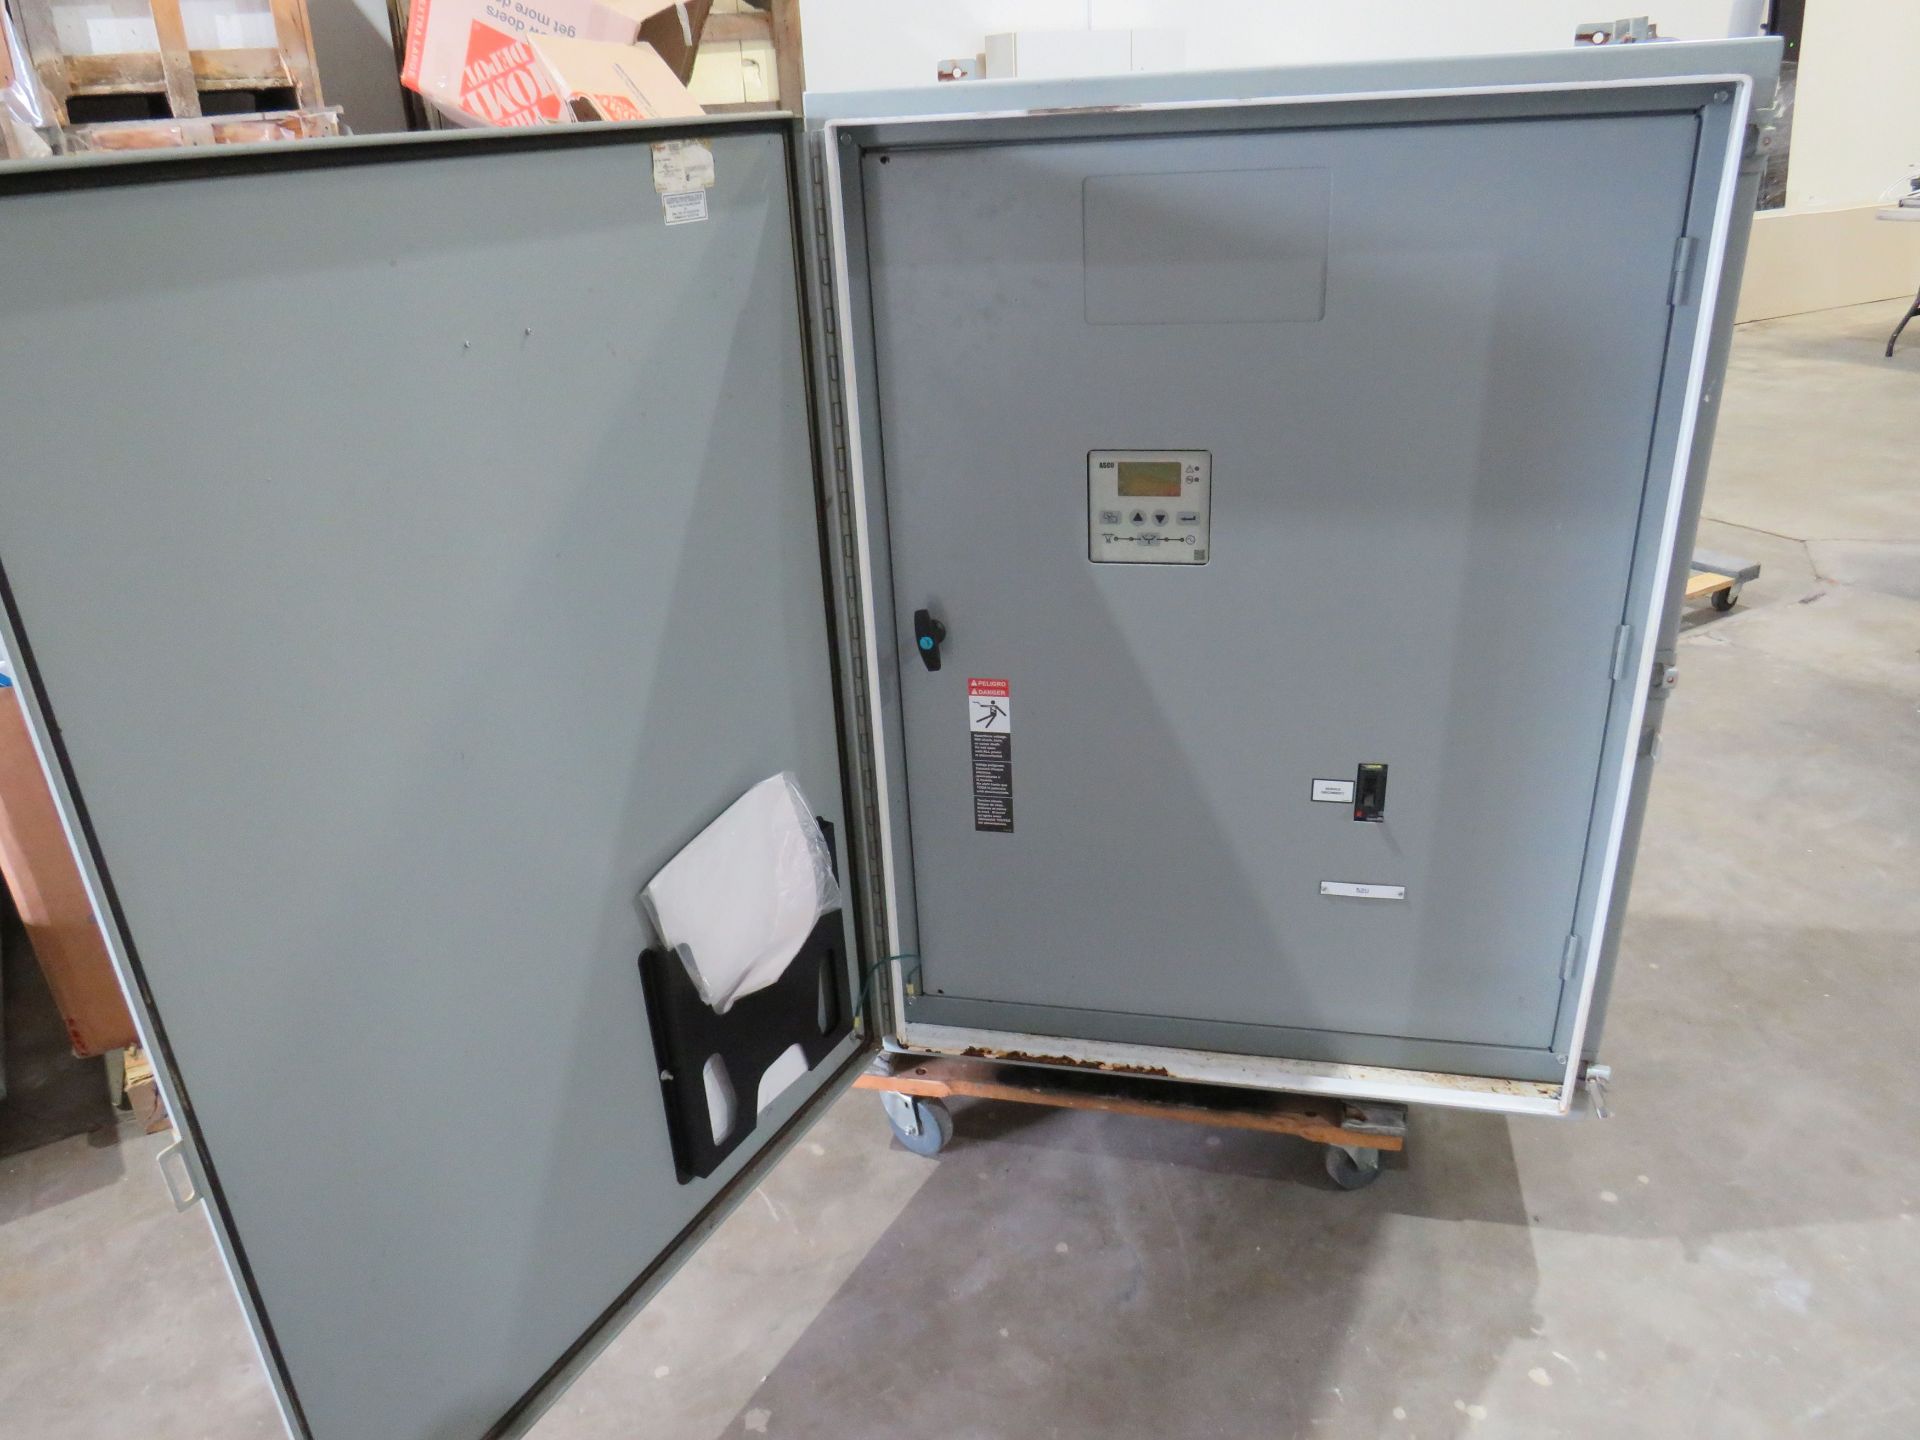 Asgo 200 amp control panel for generator - Image 9 of 9